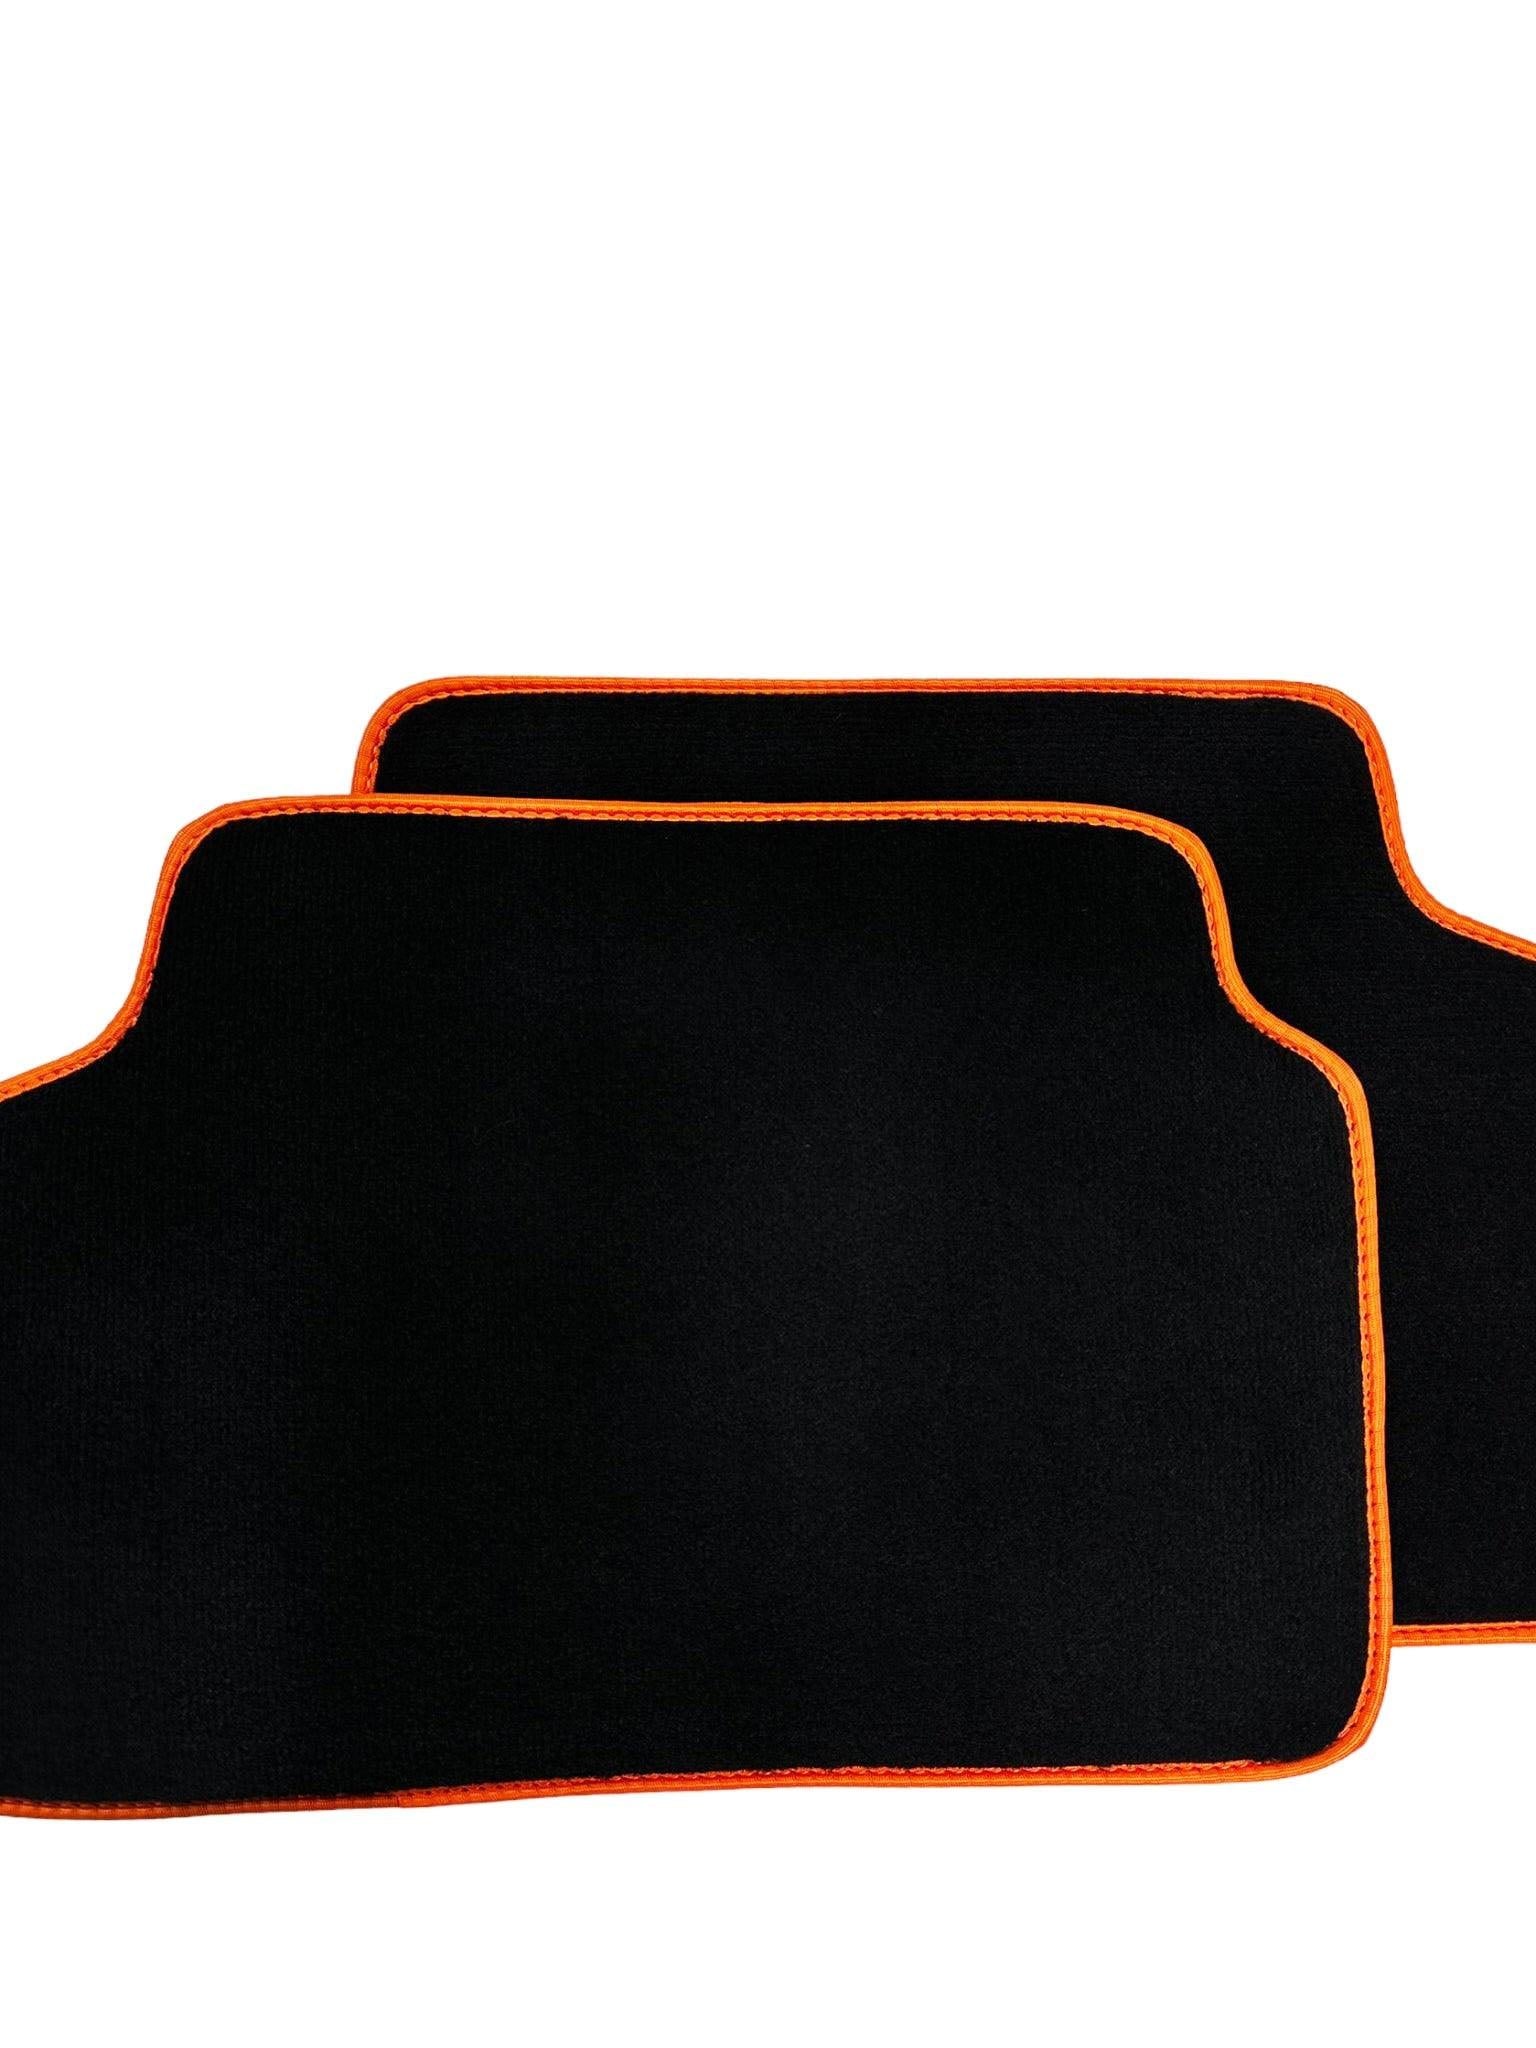 Black Floor Floor Mats For BMW X5 Series E70 | Orange Trim